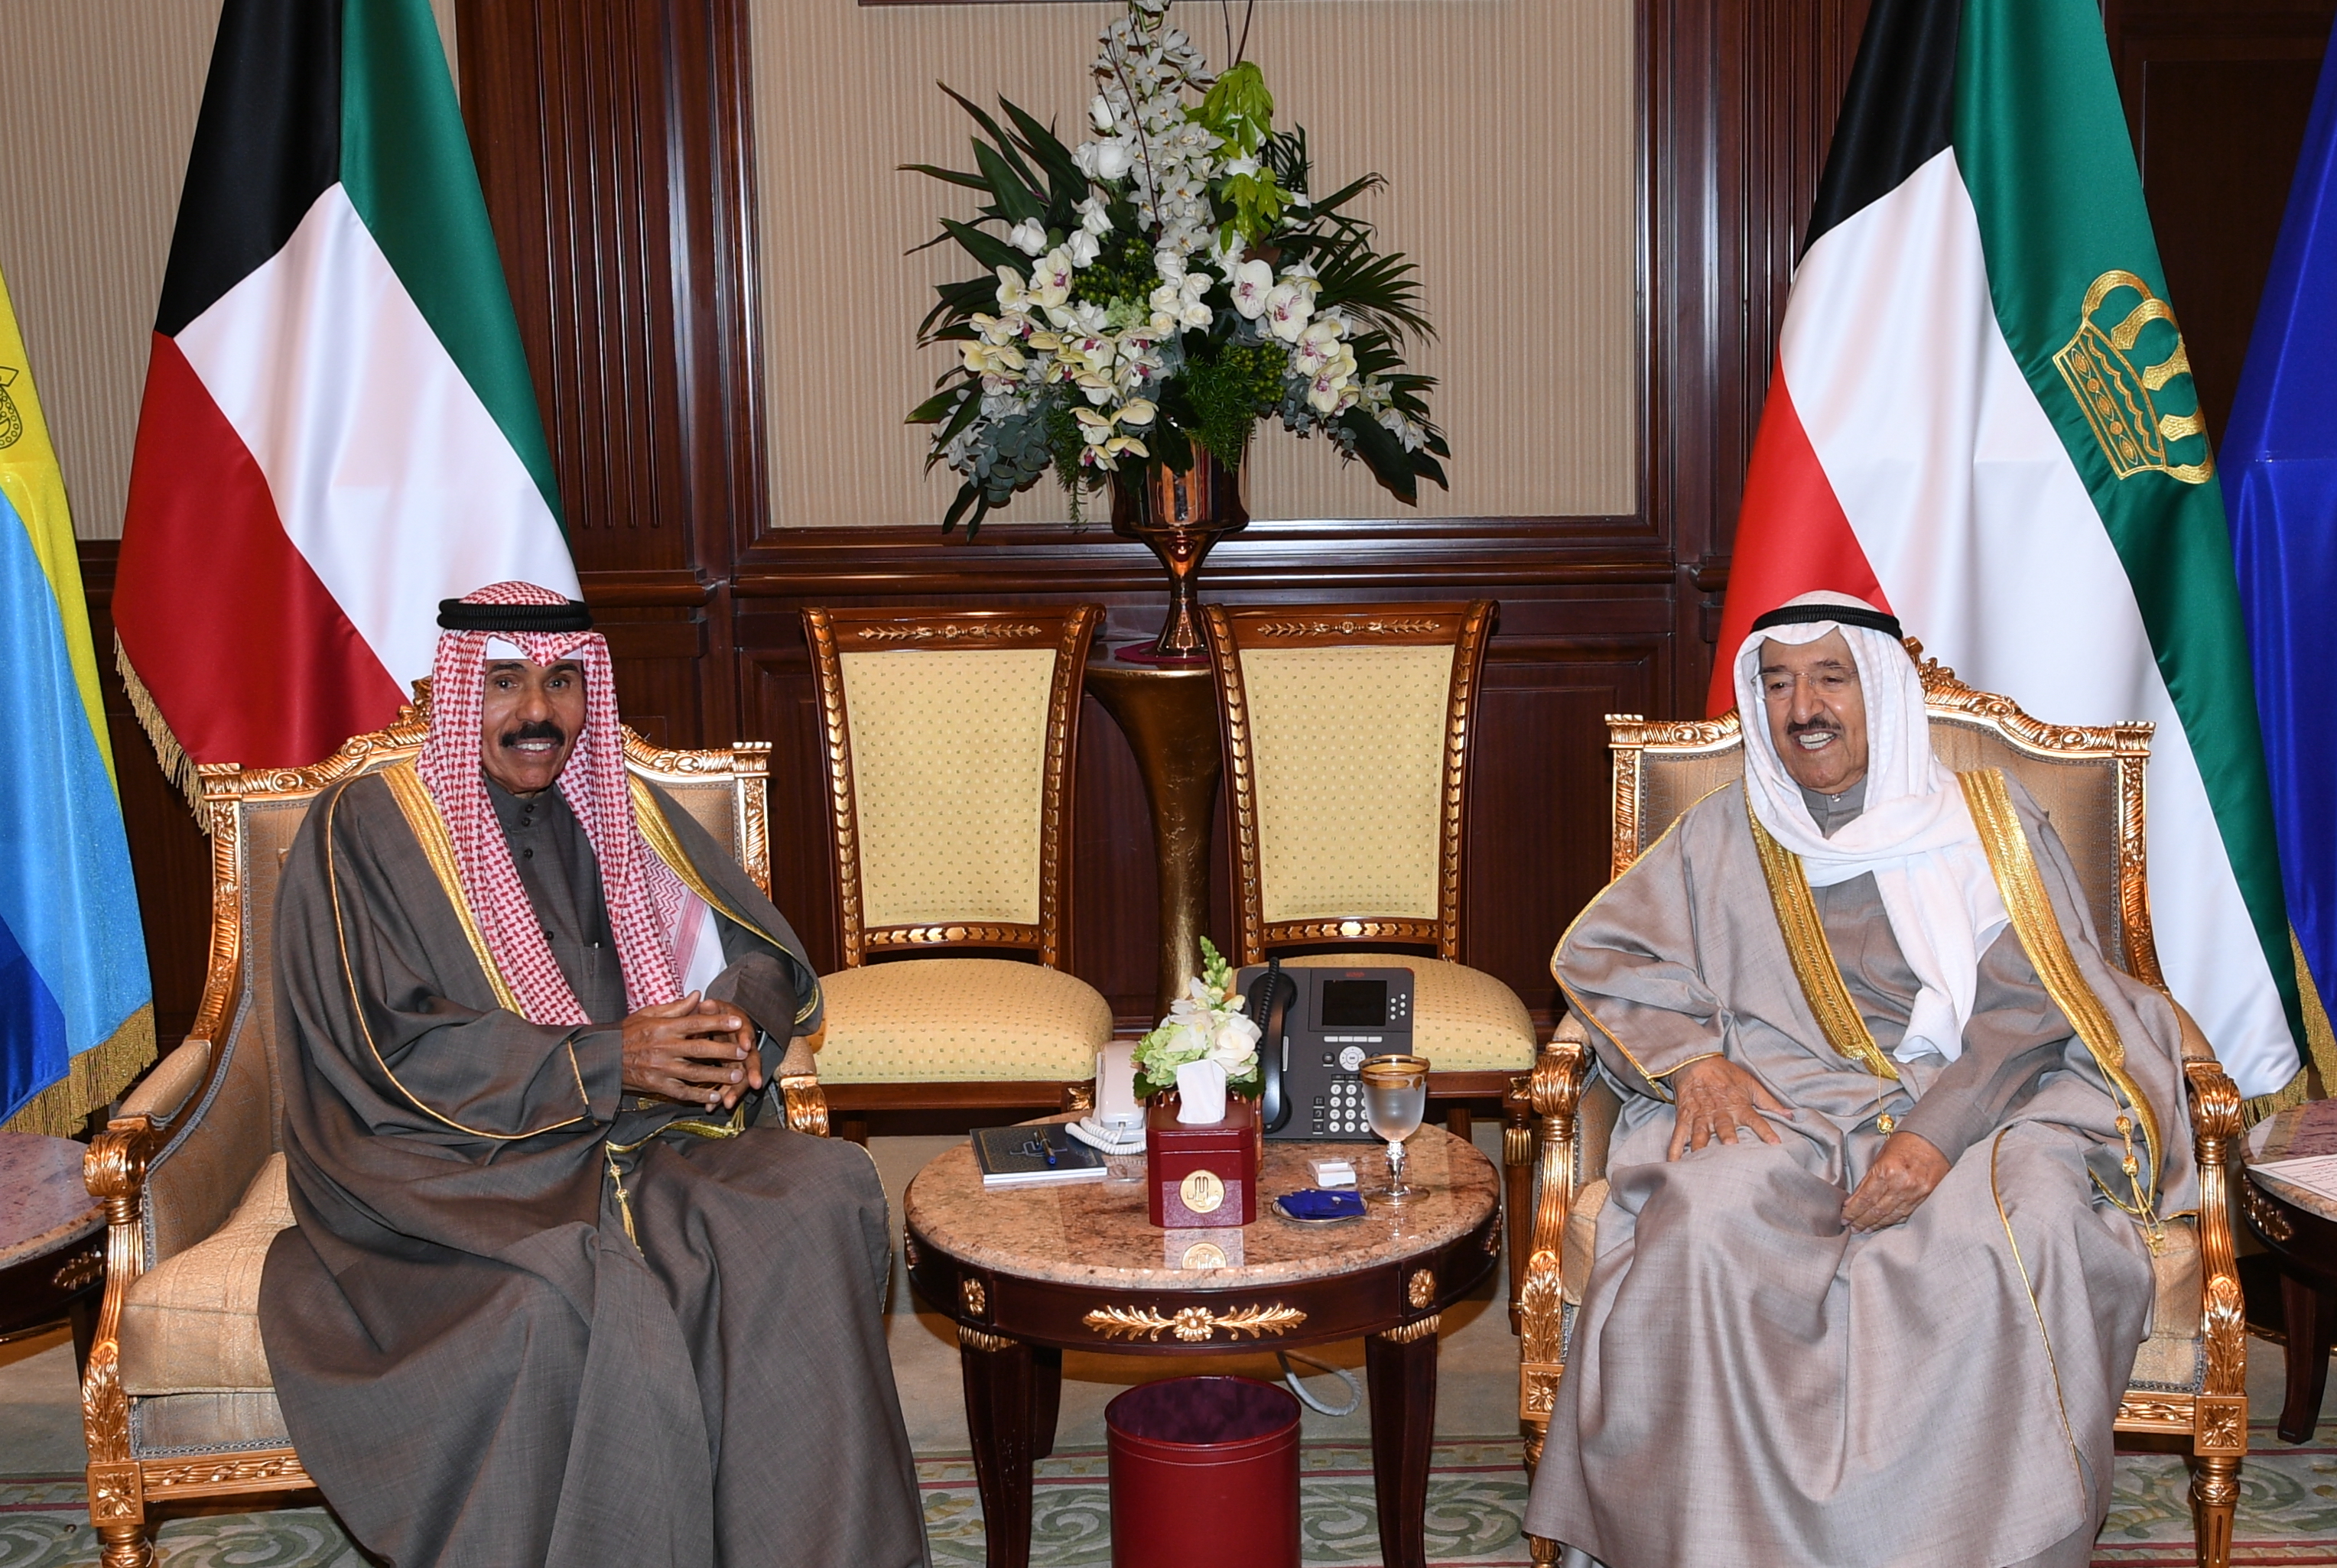 His Highness the Amir Sheikh Sabah Al-Ahmad Al-Jaber Al-Sabah received His Highness the Crown Prince Sheikh Nawaf Al-Ahmad Al-Jaber Al-Sabah